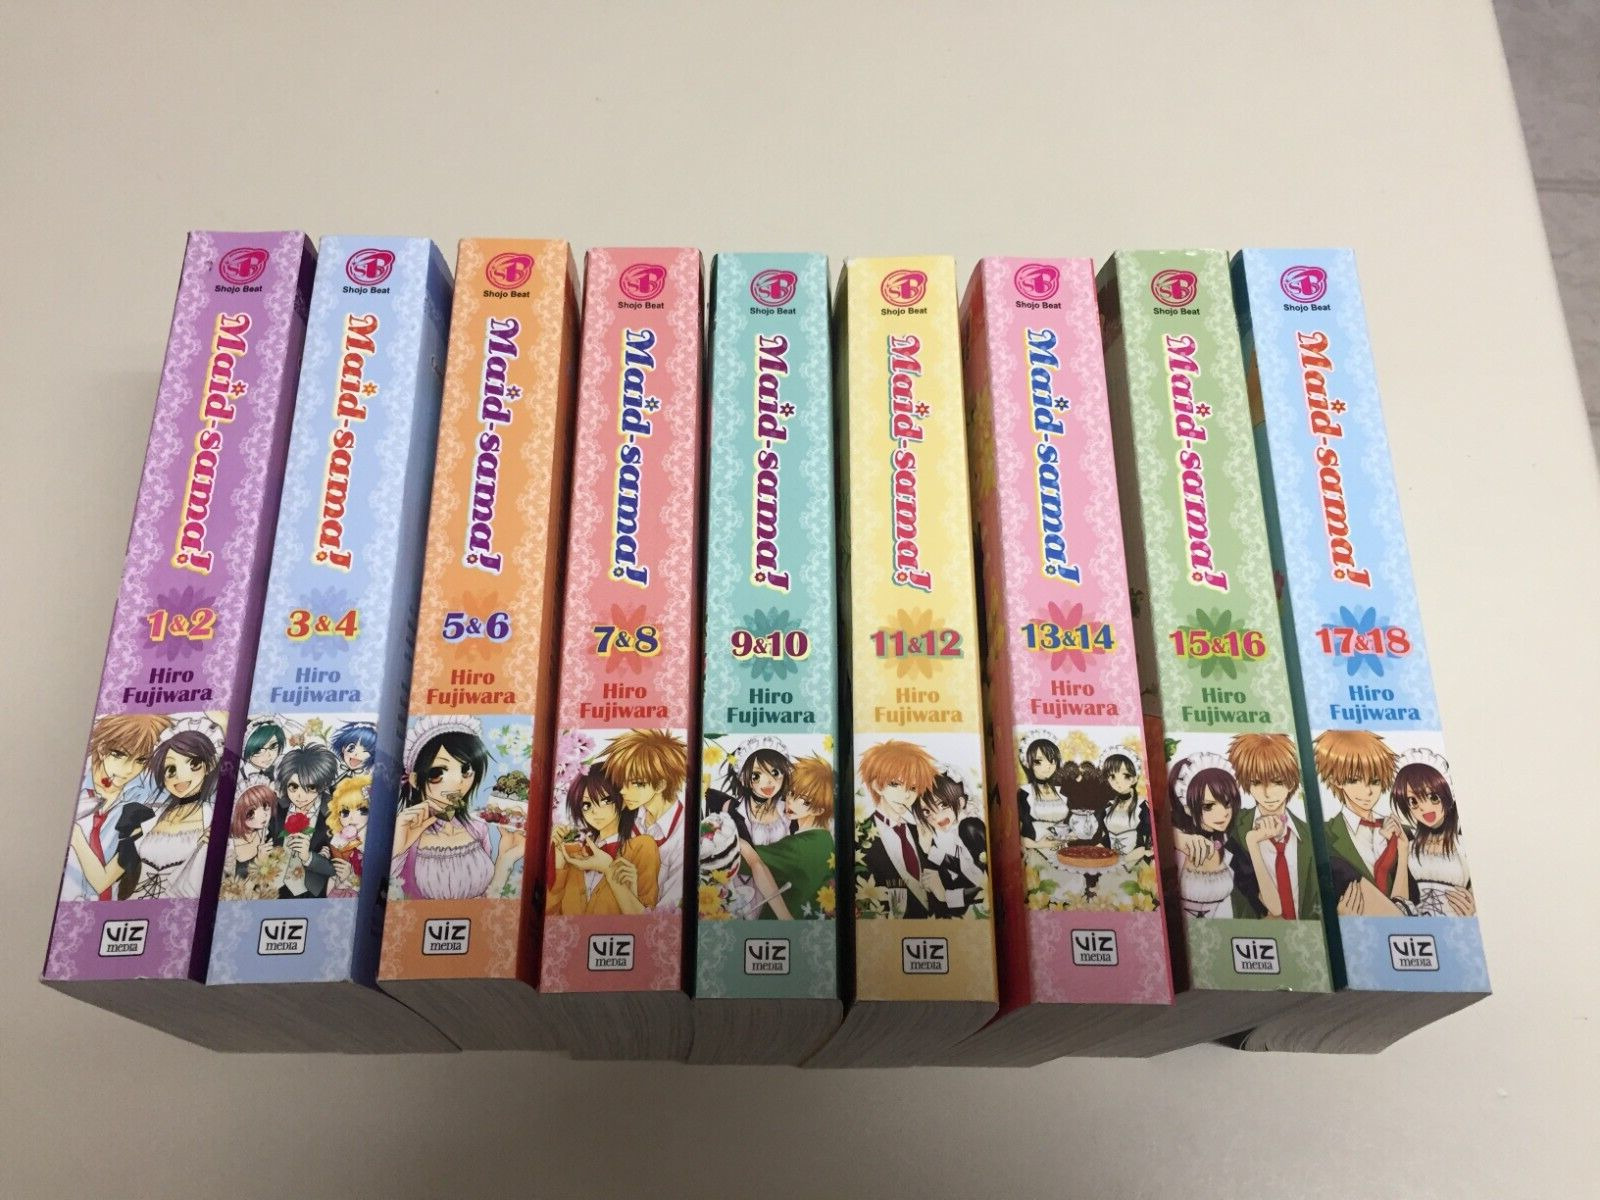 Maid Sama Omnibus 2 in 1 Edition Complete English Manga Set Series Volumes 1-18